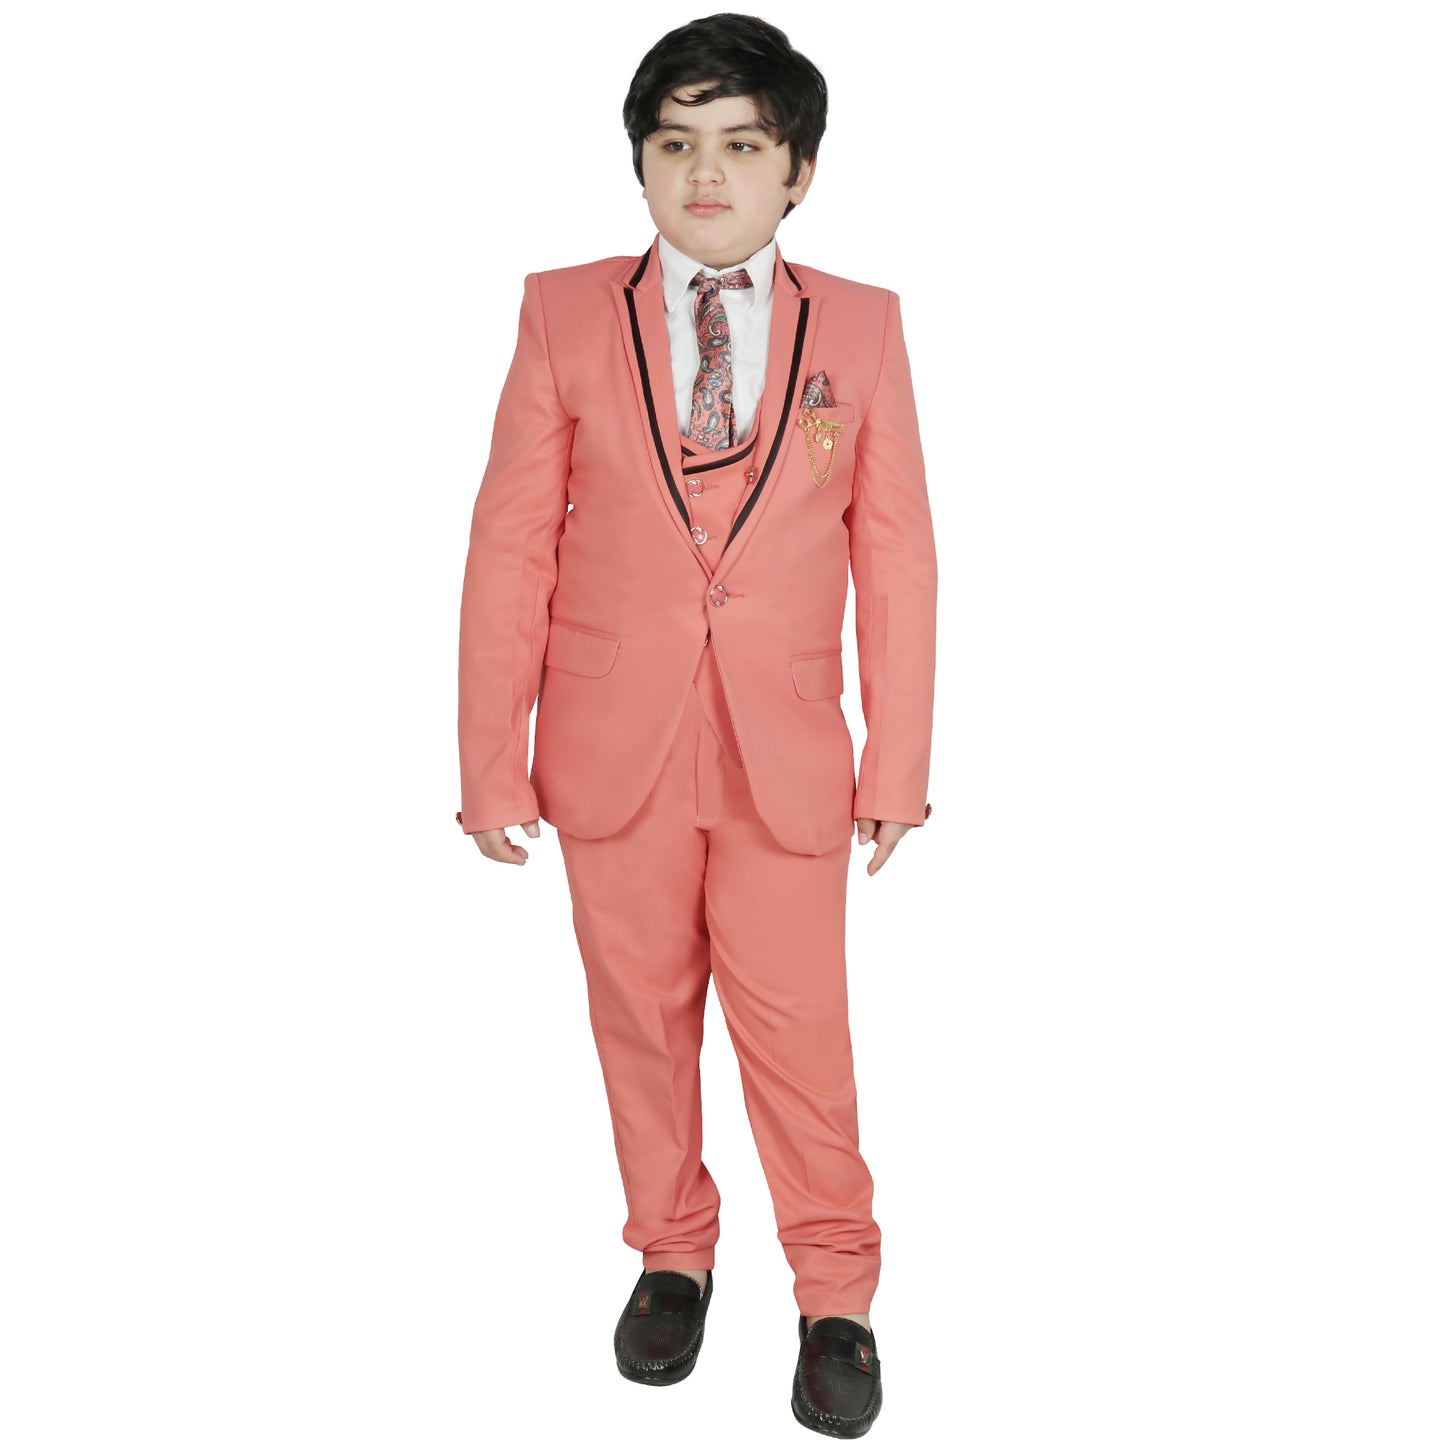 SG YUVRAJ Suits & Sets For Boys(TP-1067)